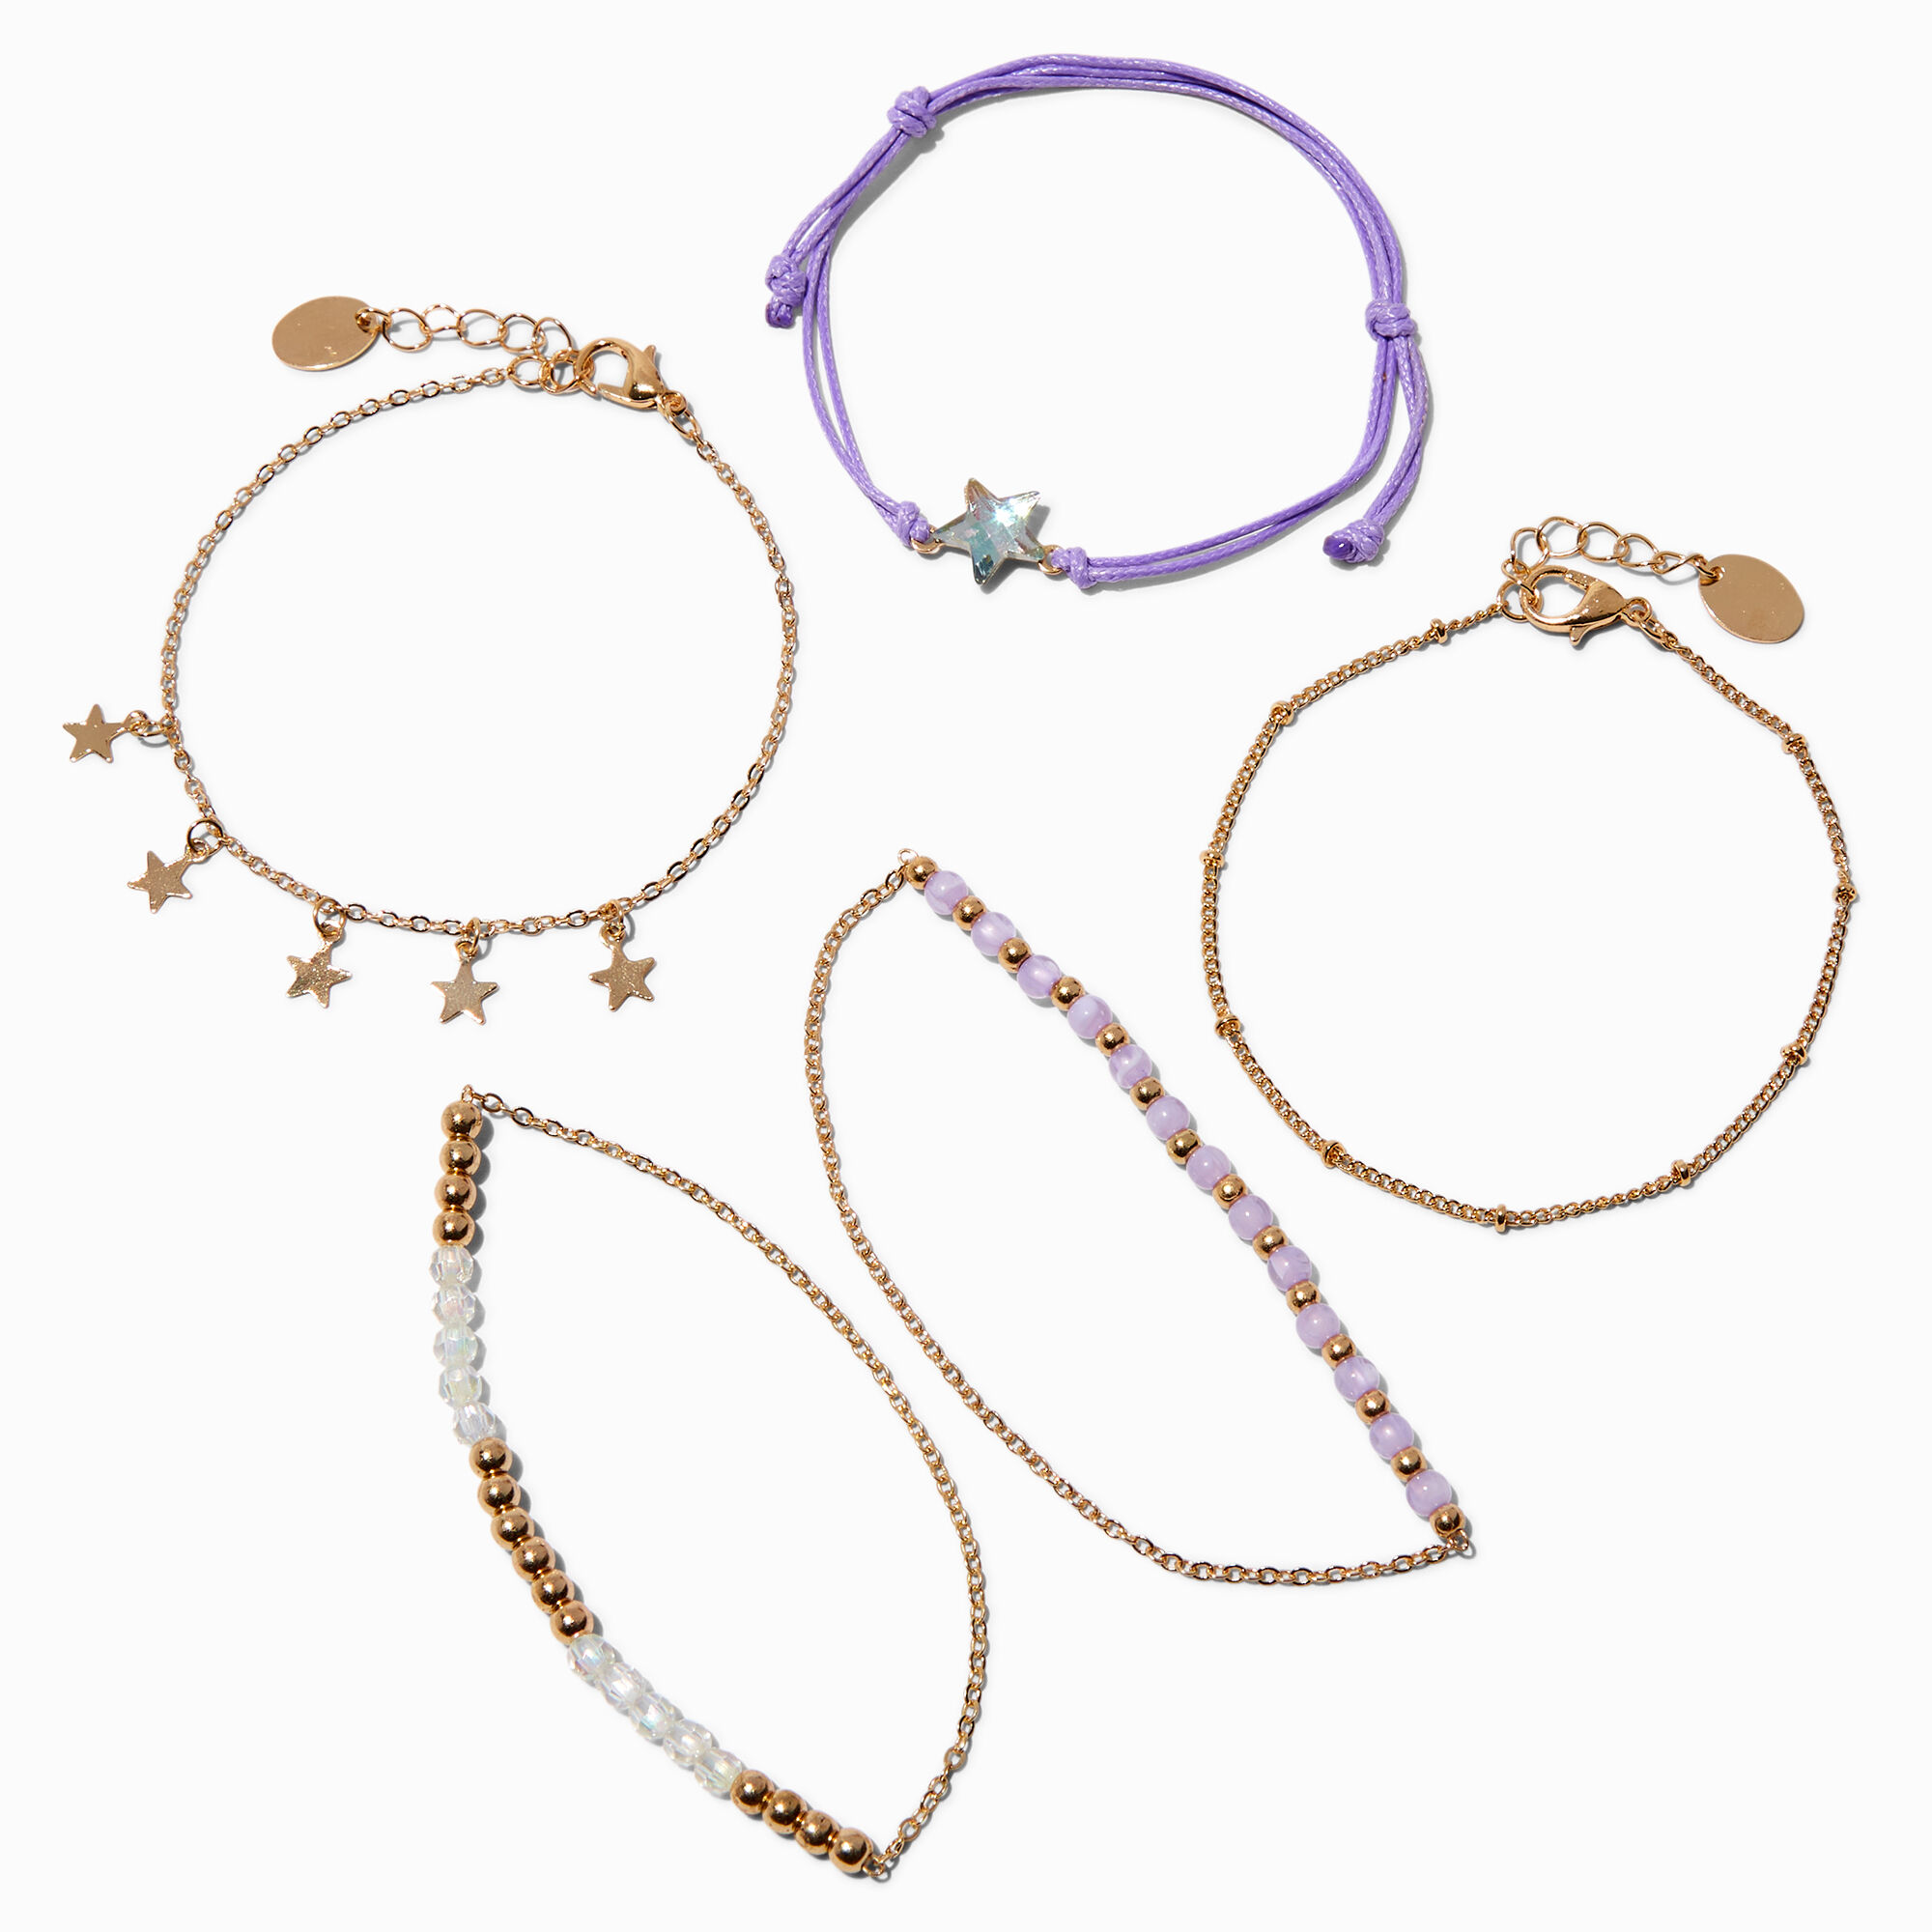 View Claires GoldTone Celestial Beaded Woven Bracelet Set 5 Pack Purple information